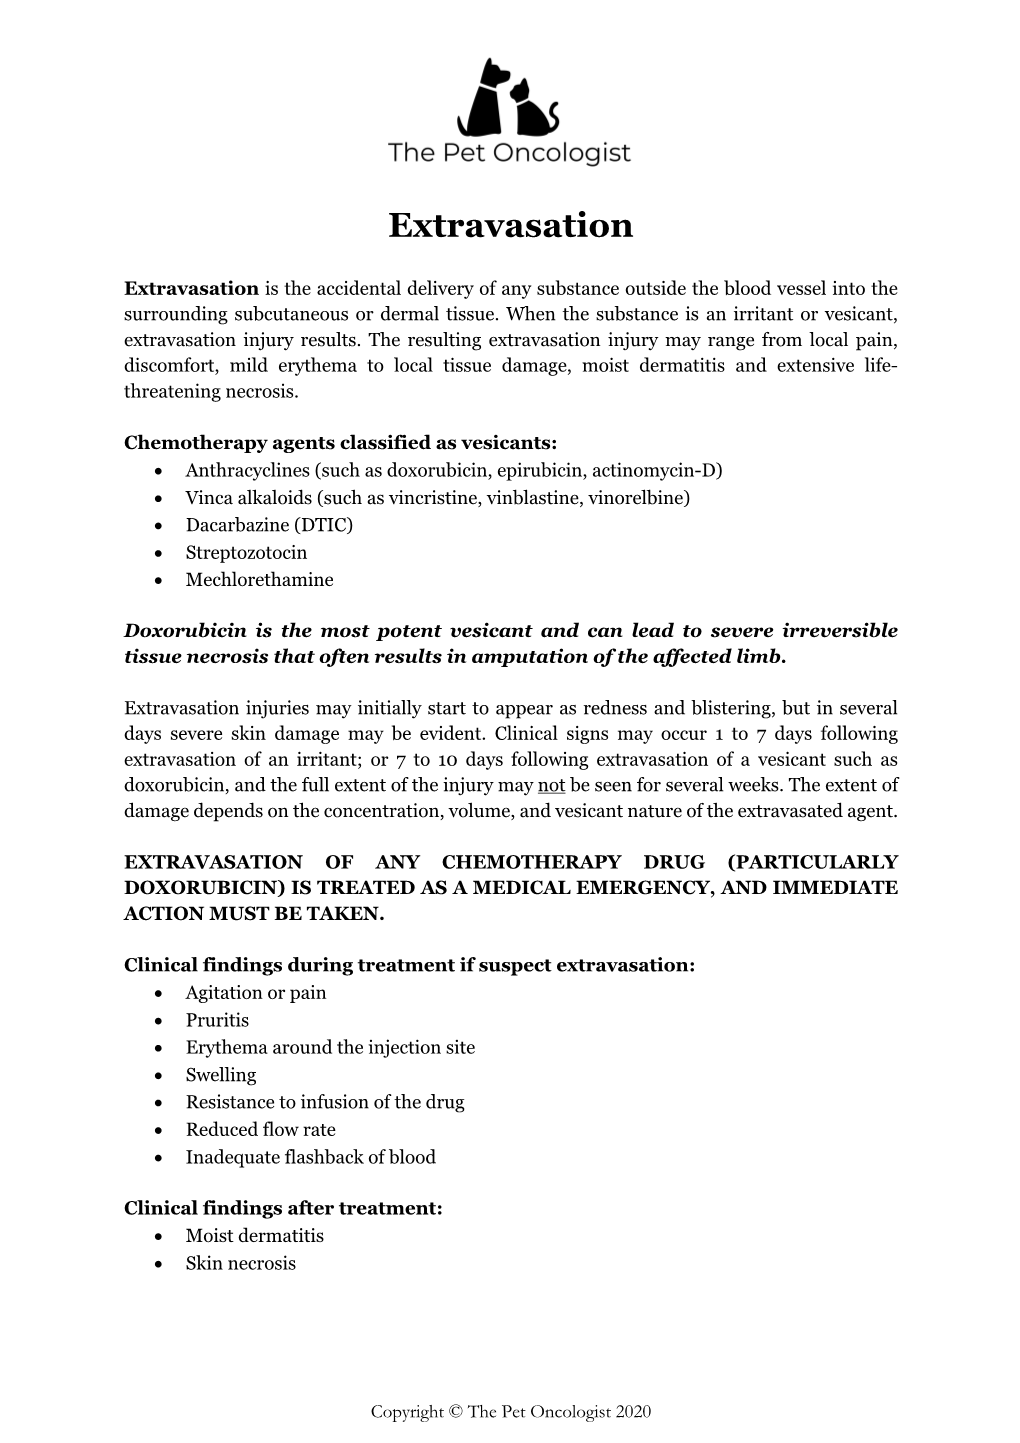 Extravasation Protocol